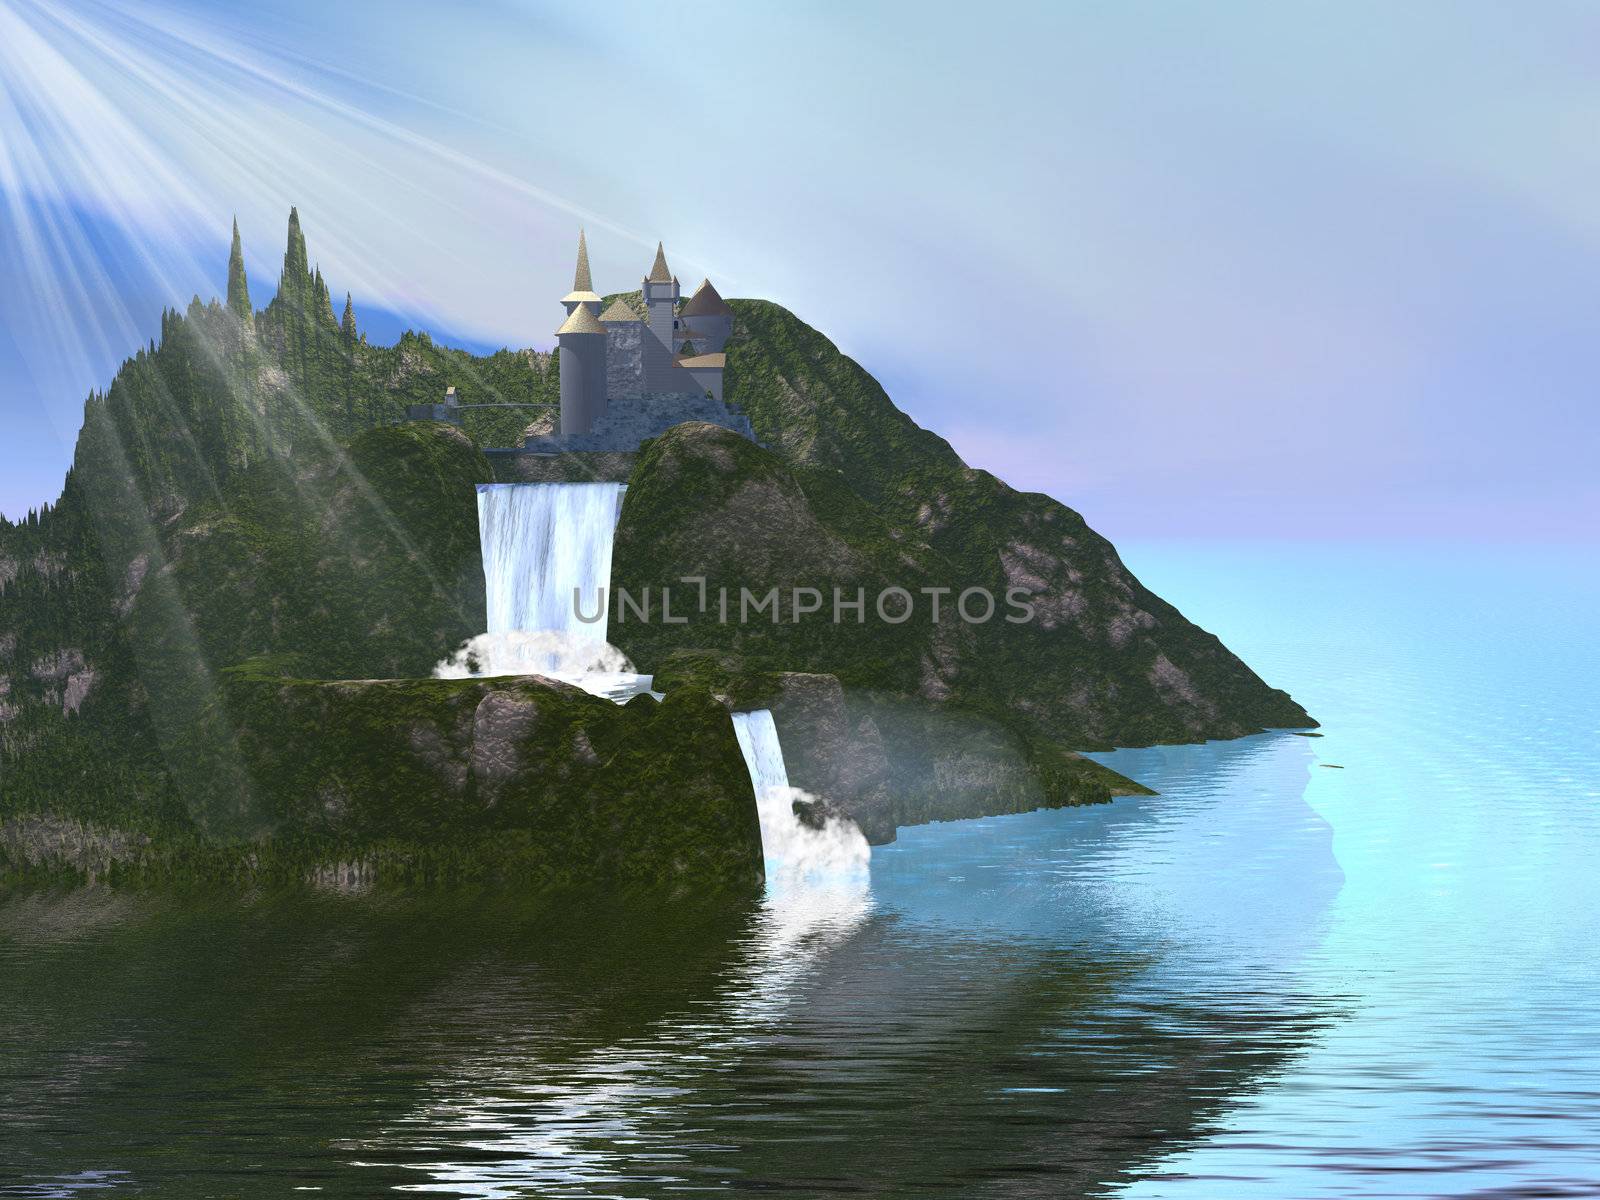 A fairytale castle sits among beautiful waterfalls.